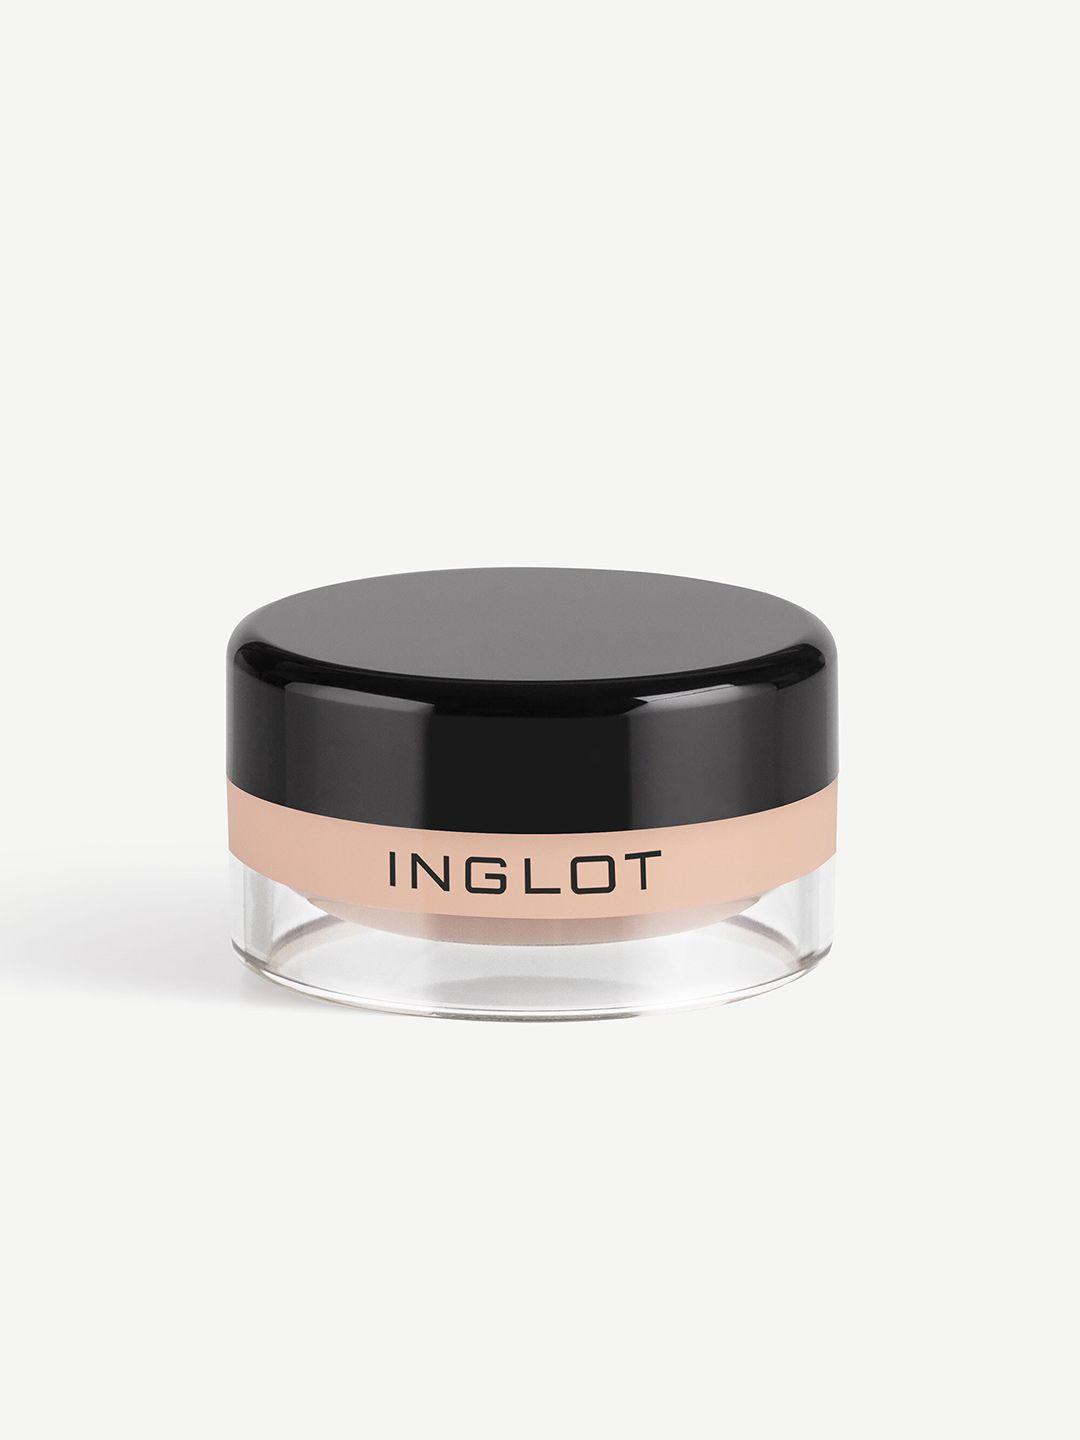 inglot amc waterproof & matte gel eyeliner 5.5g - shade 68